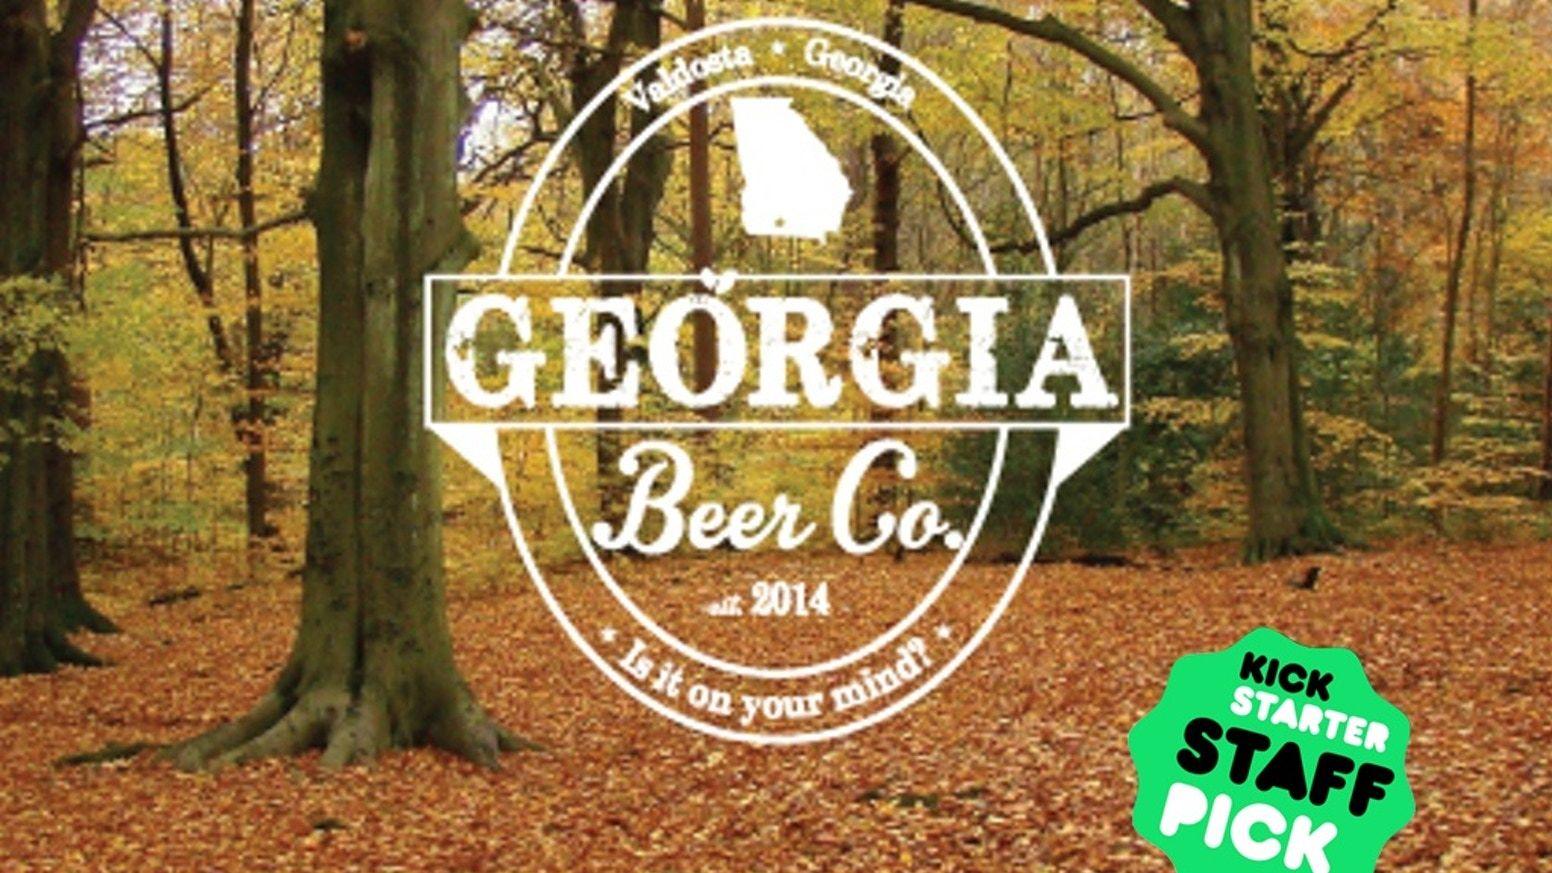 Georgia Beer Logo - Georgia Beer Co. by Georgia Beer Co. — Kickstarter